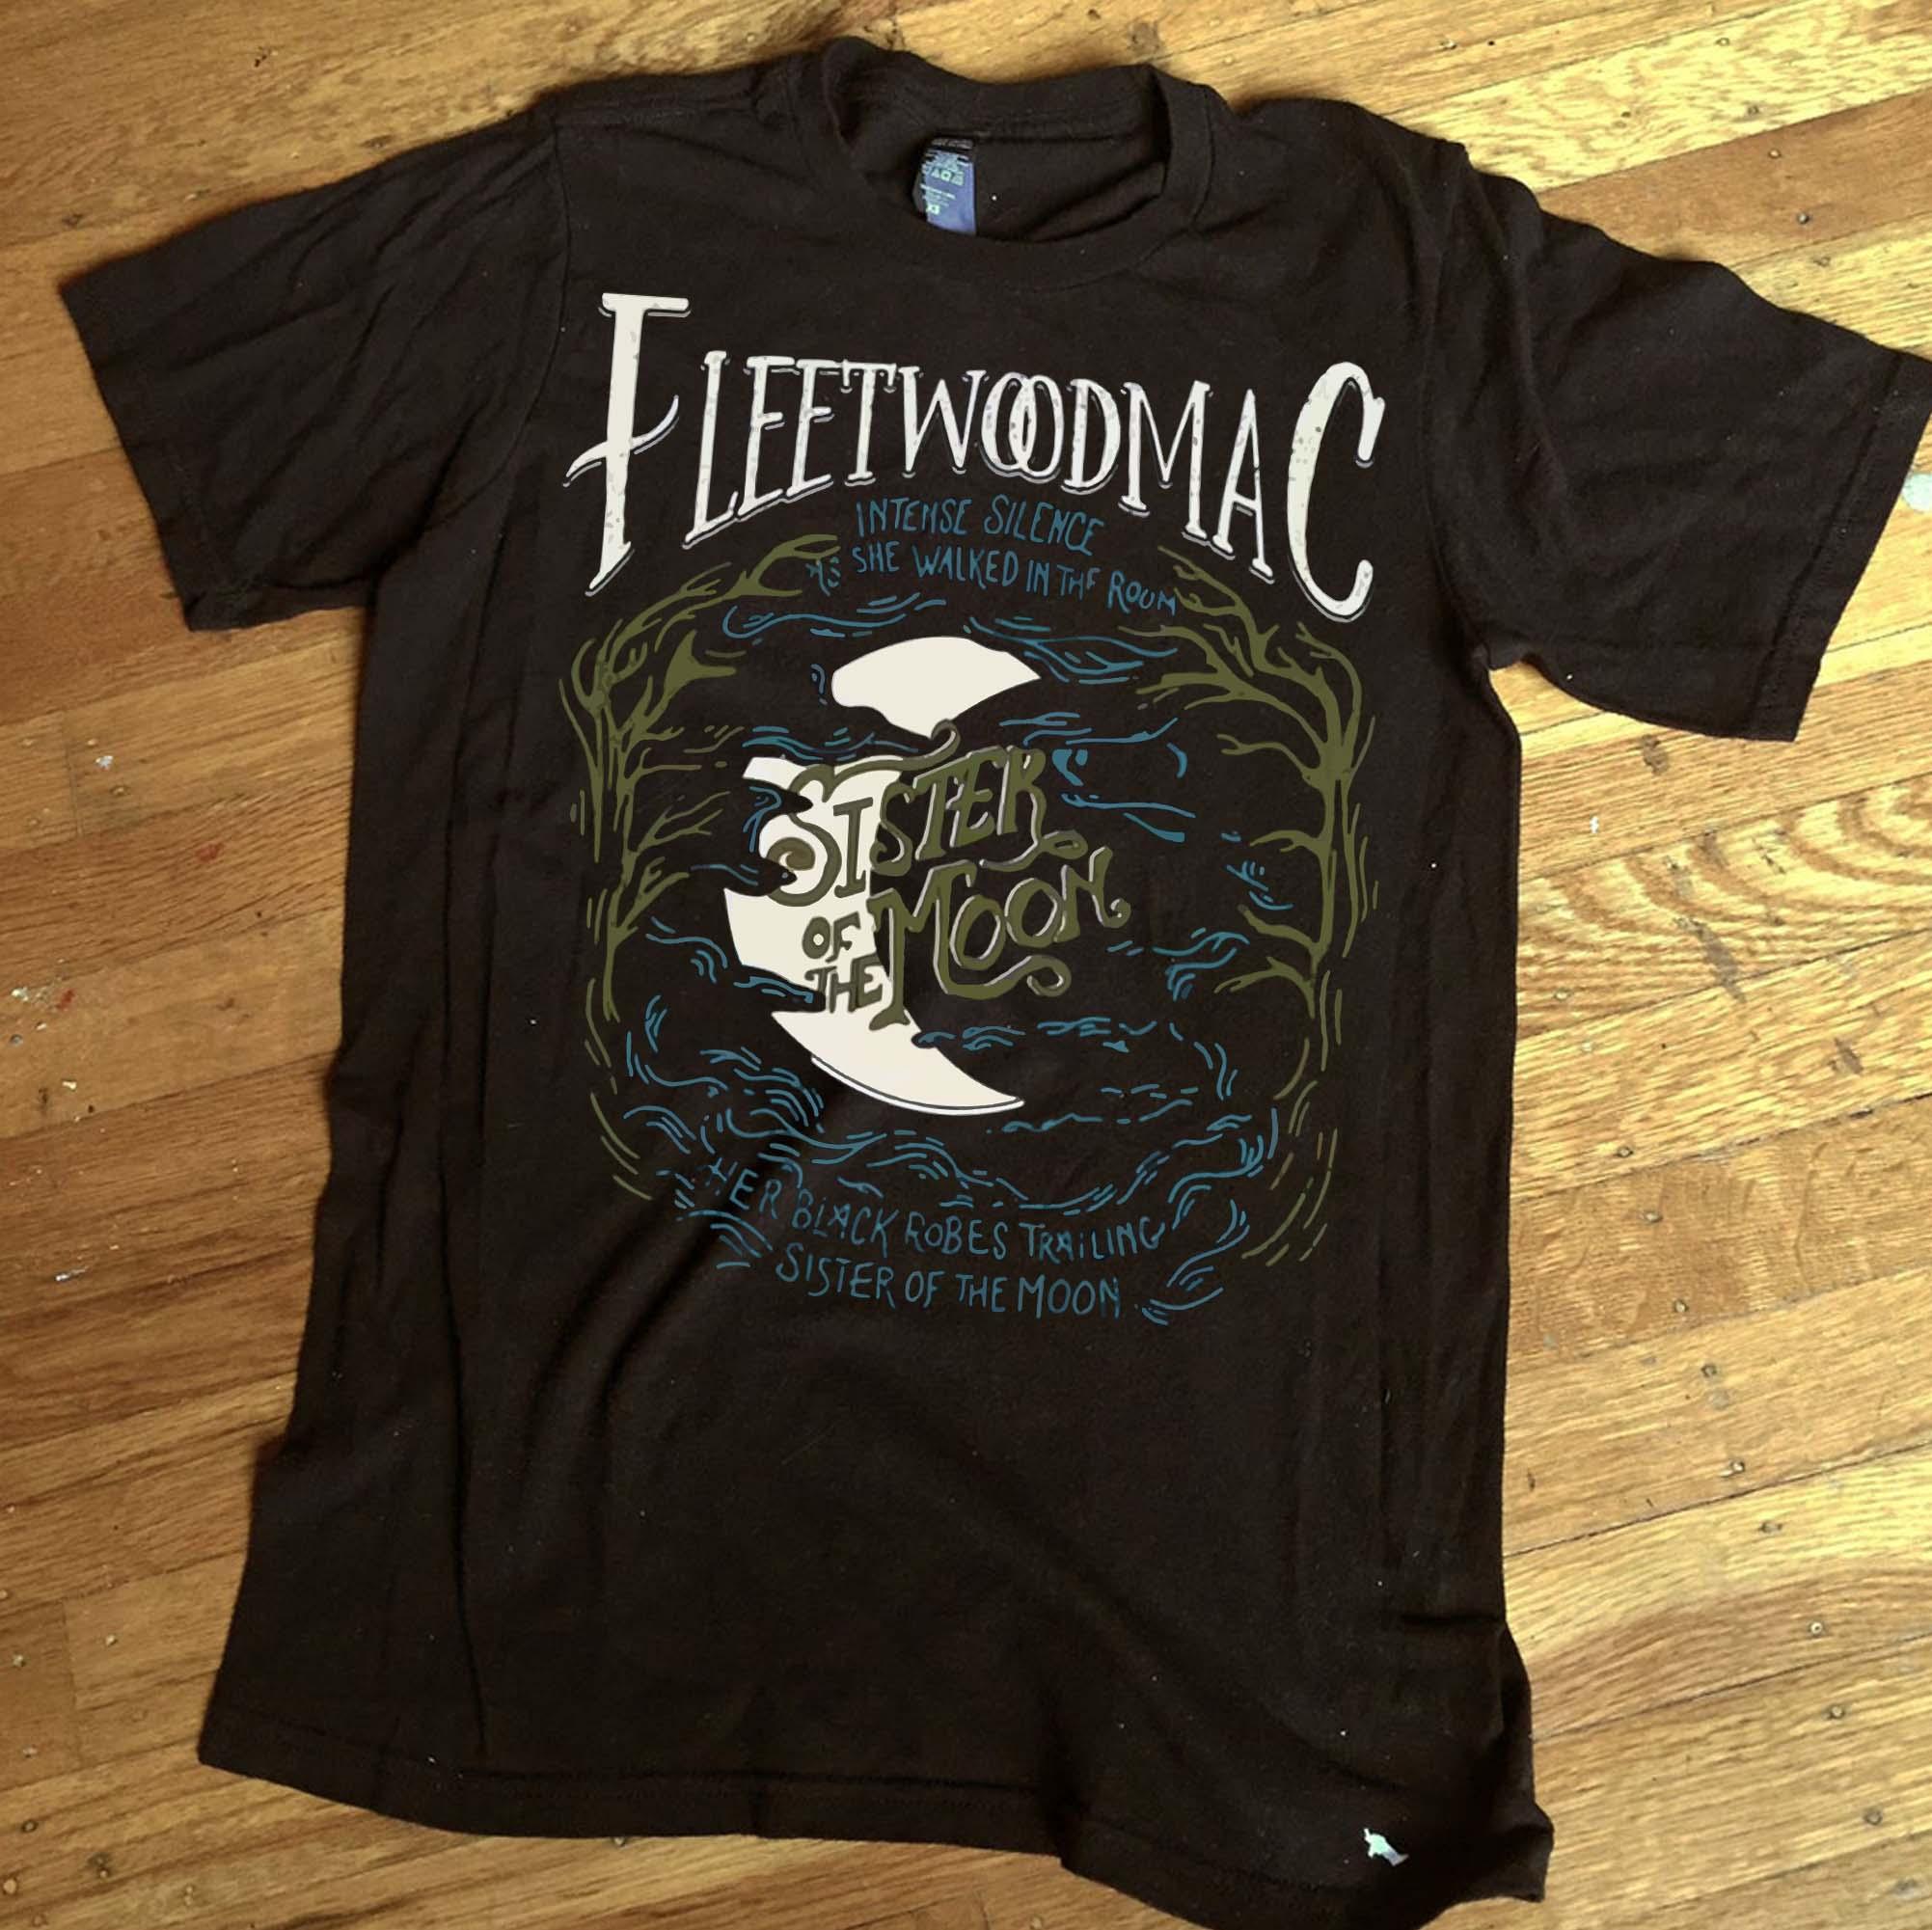 Fleetwood Mac intense silence - Sister of the moon, Halloween scary T-shirt